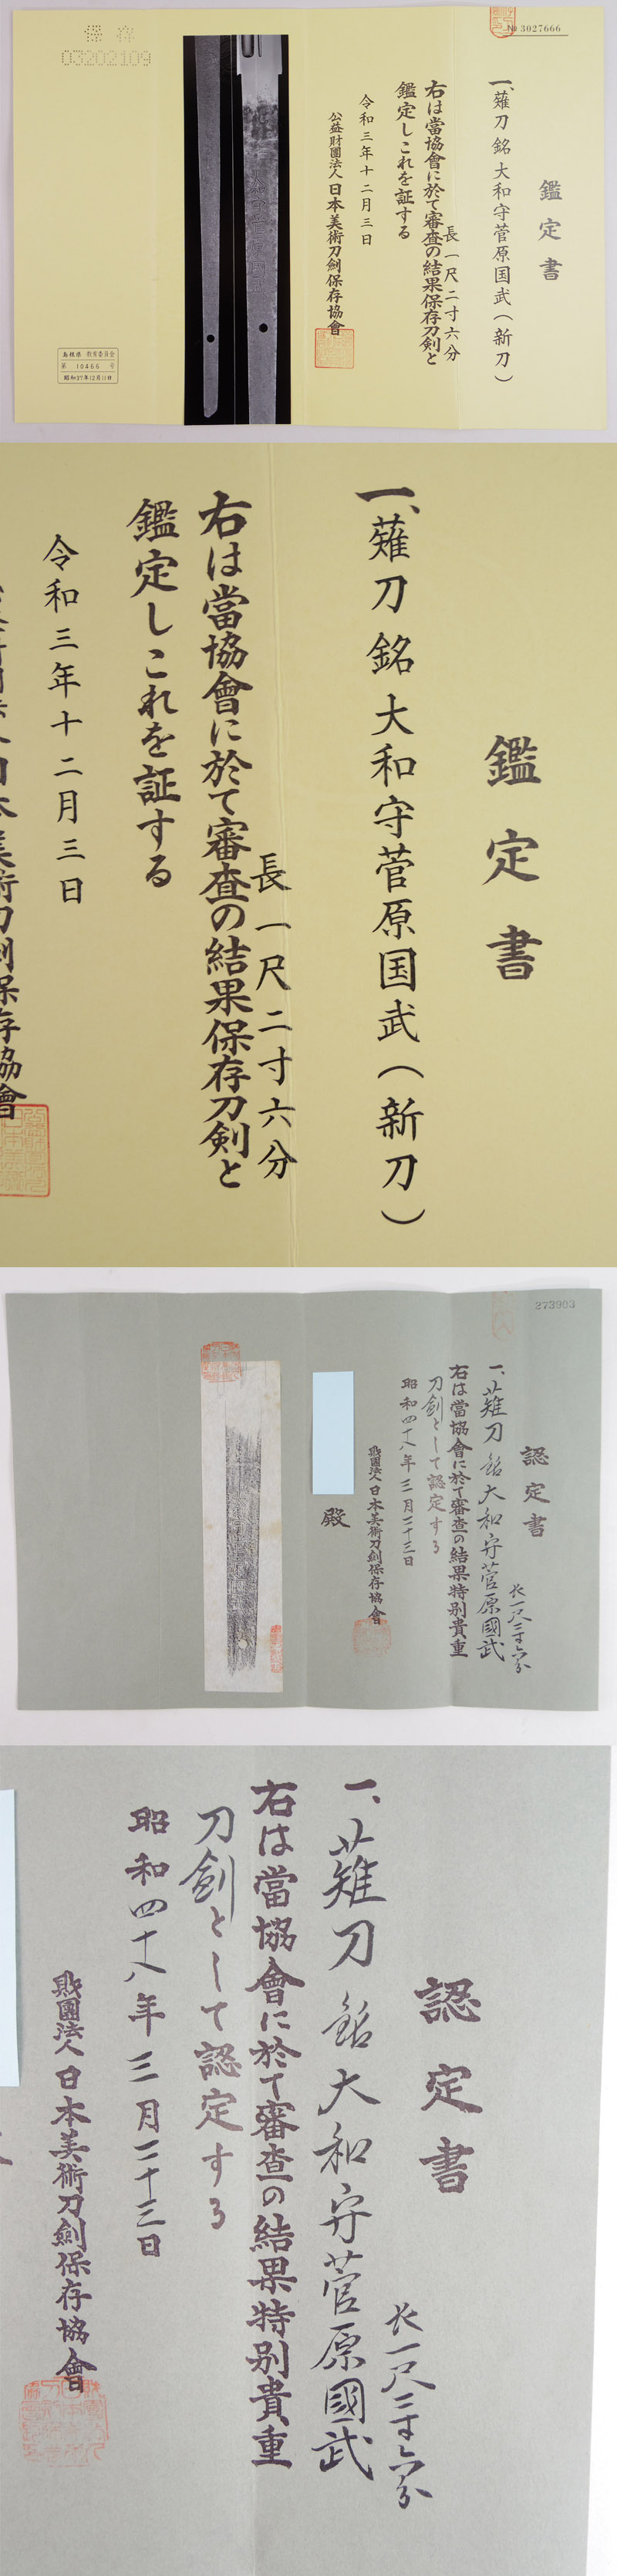 薙刀　大和守菅原国武(新刀) (業物) Picture of Certificate